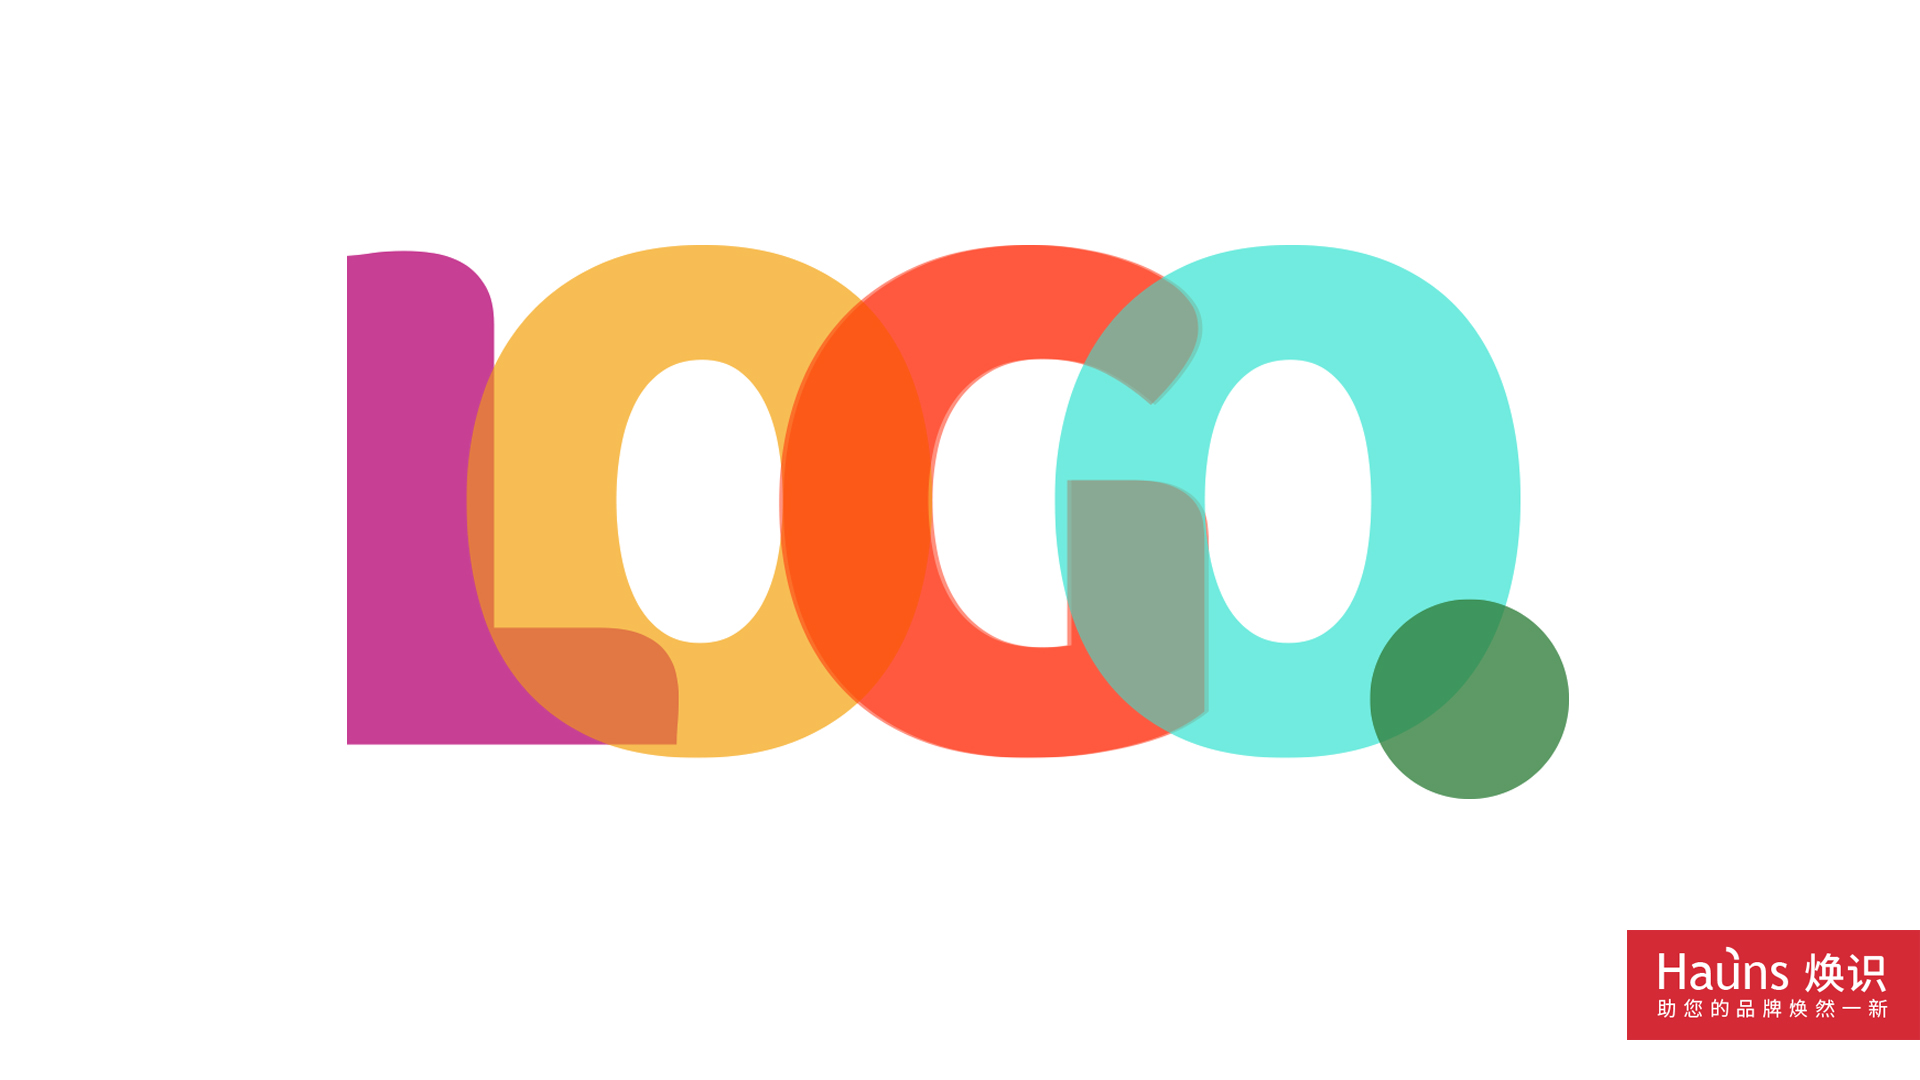 LOGO设计价格 logo设计价位 vi价格.jpg